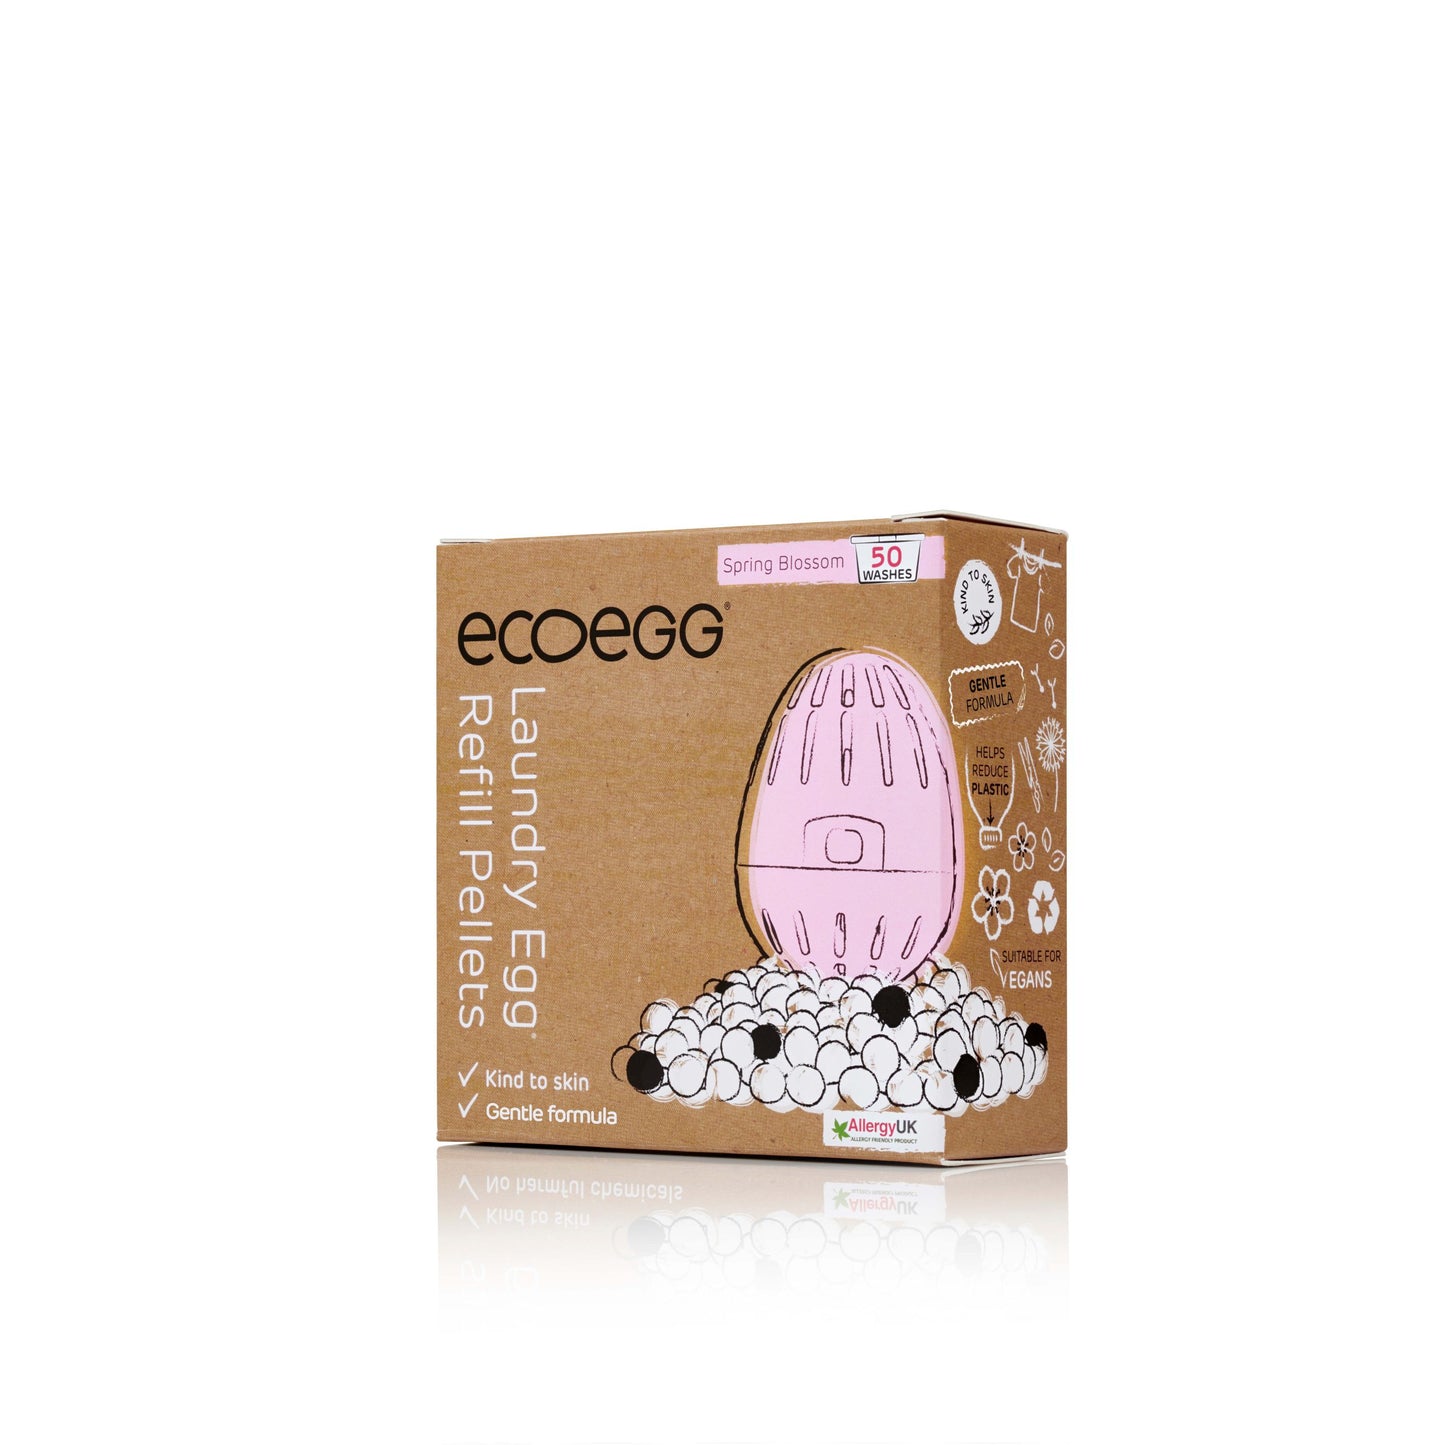 EcoEgg Laundry Egg - Refill Pallets